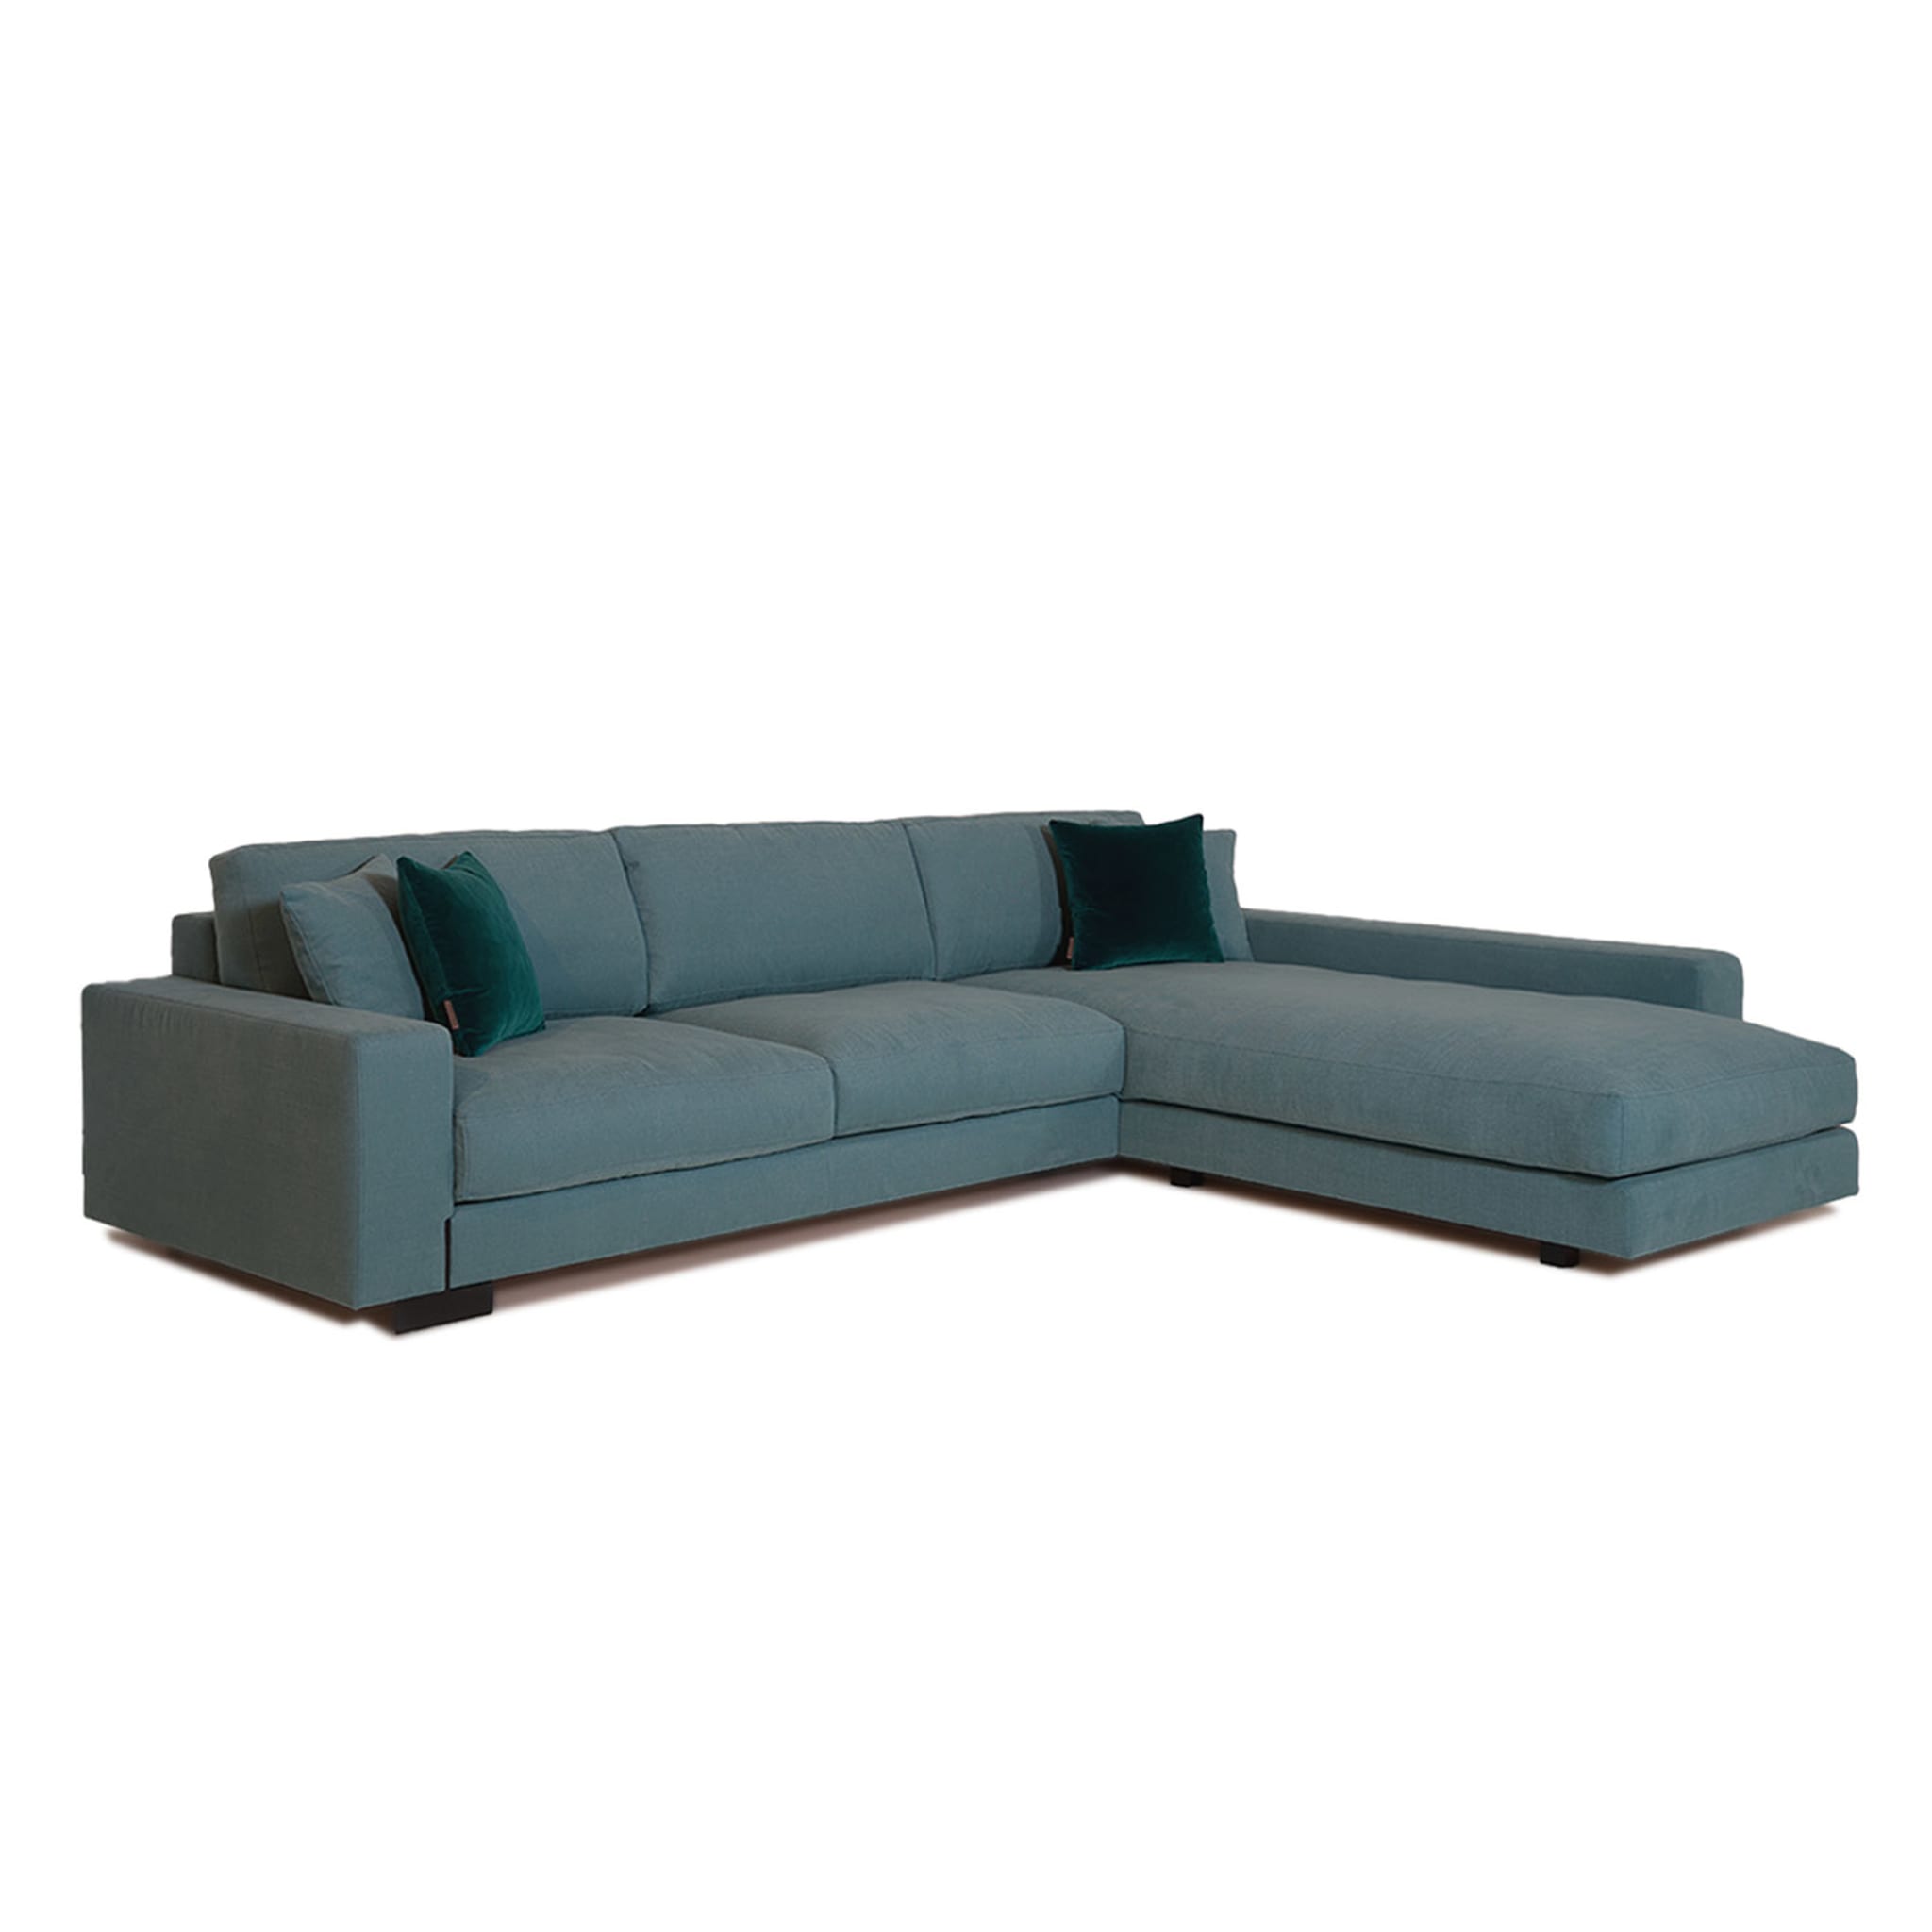 Glam Sofa with Chaise Longye - Alternative view 1